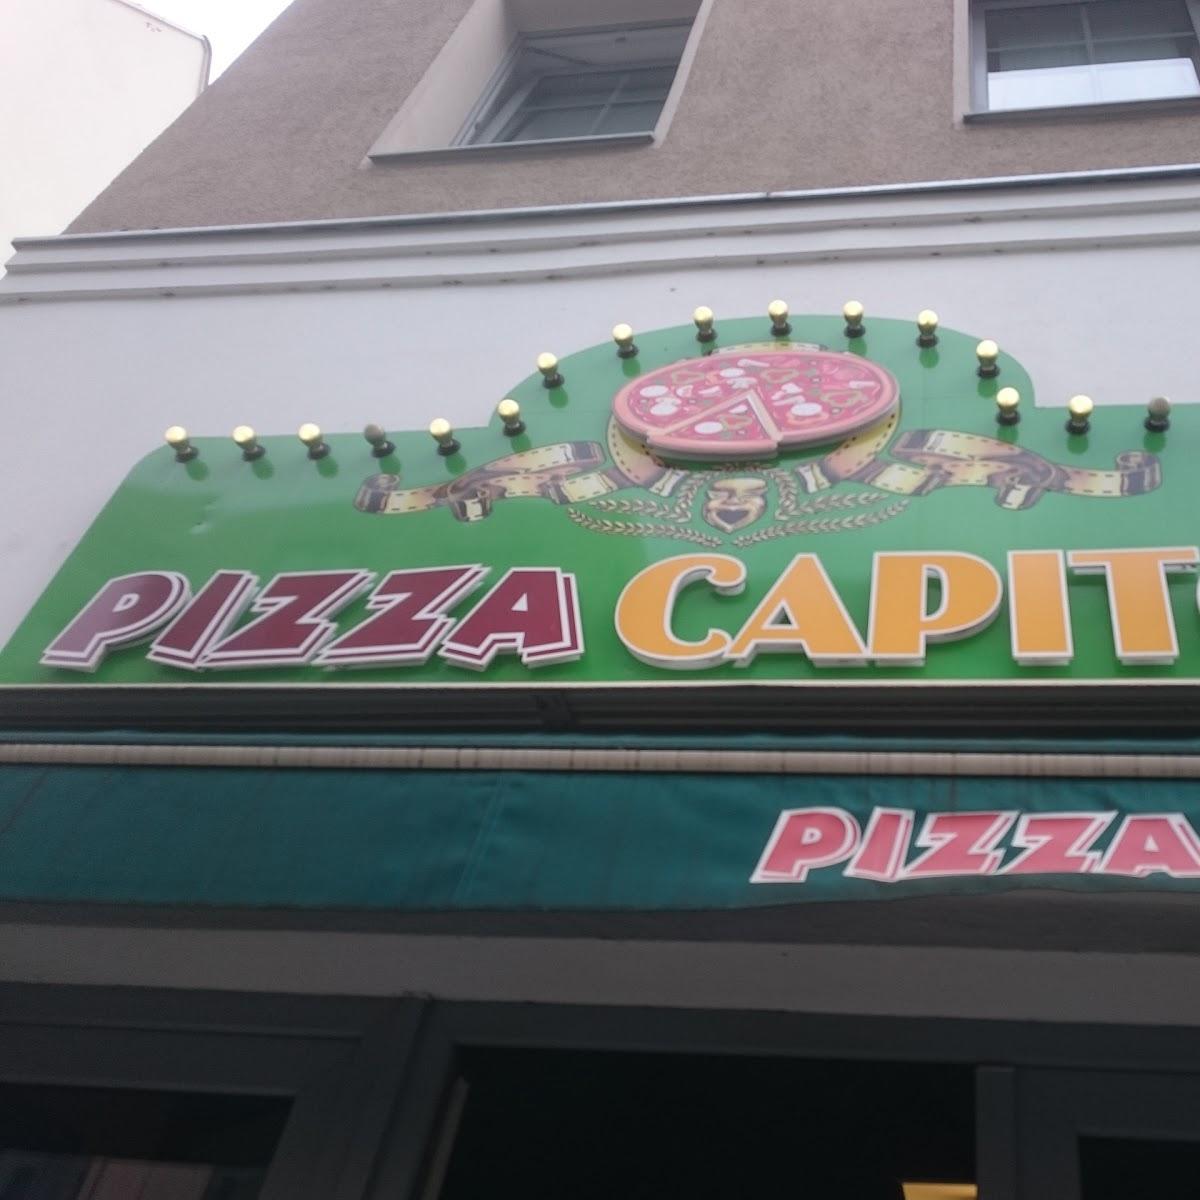 Restaurant "Pizza Capitol" in Berlin